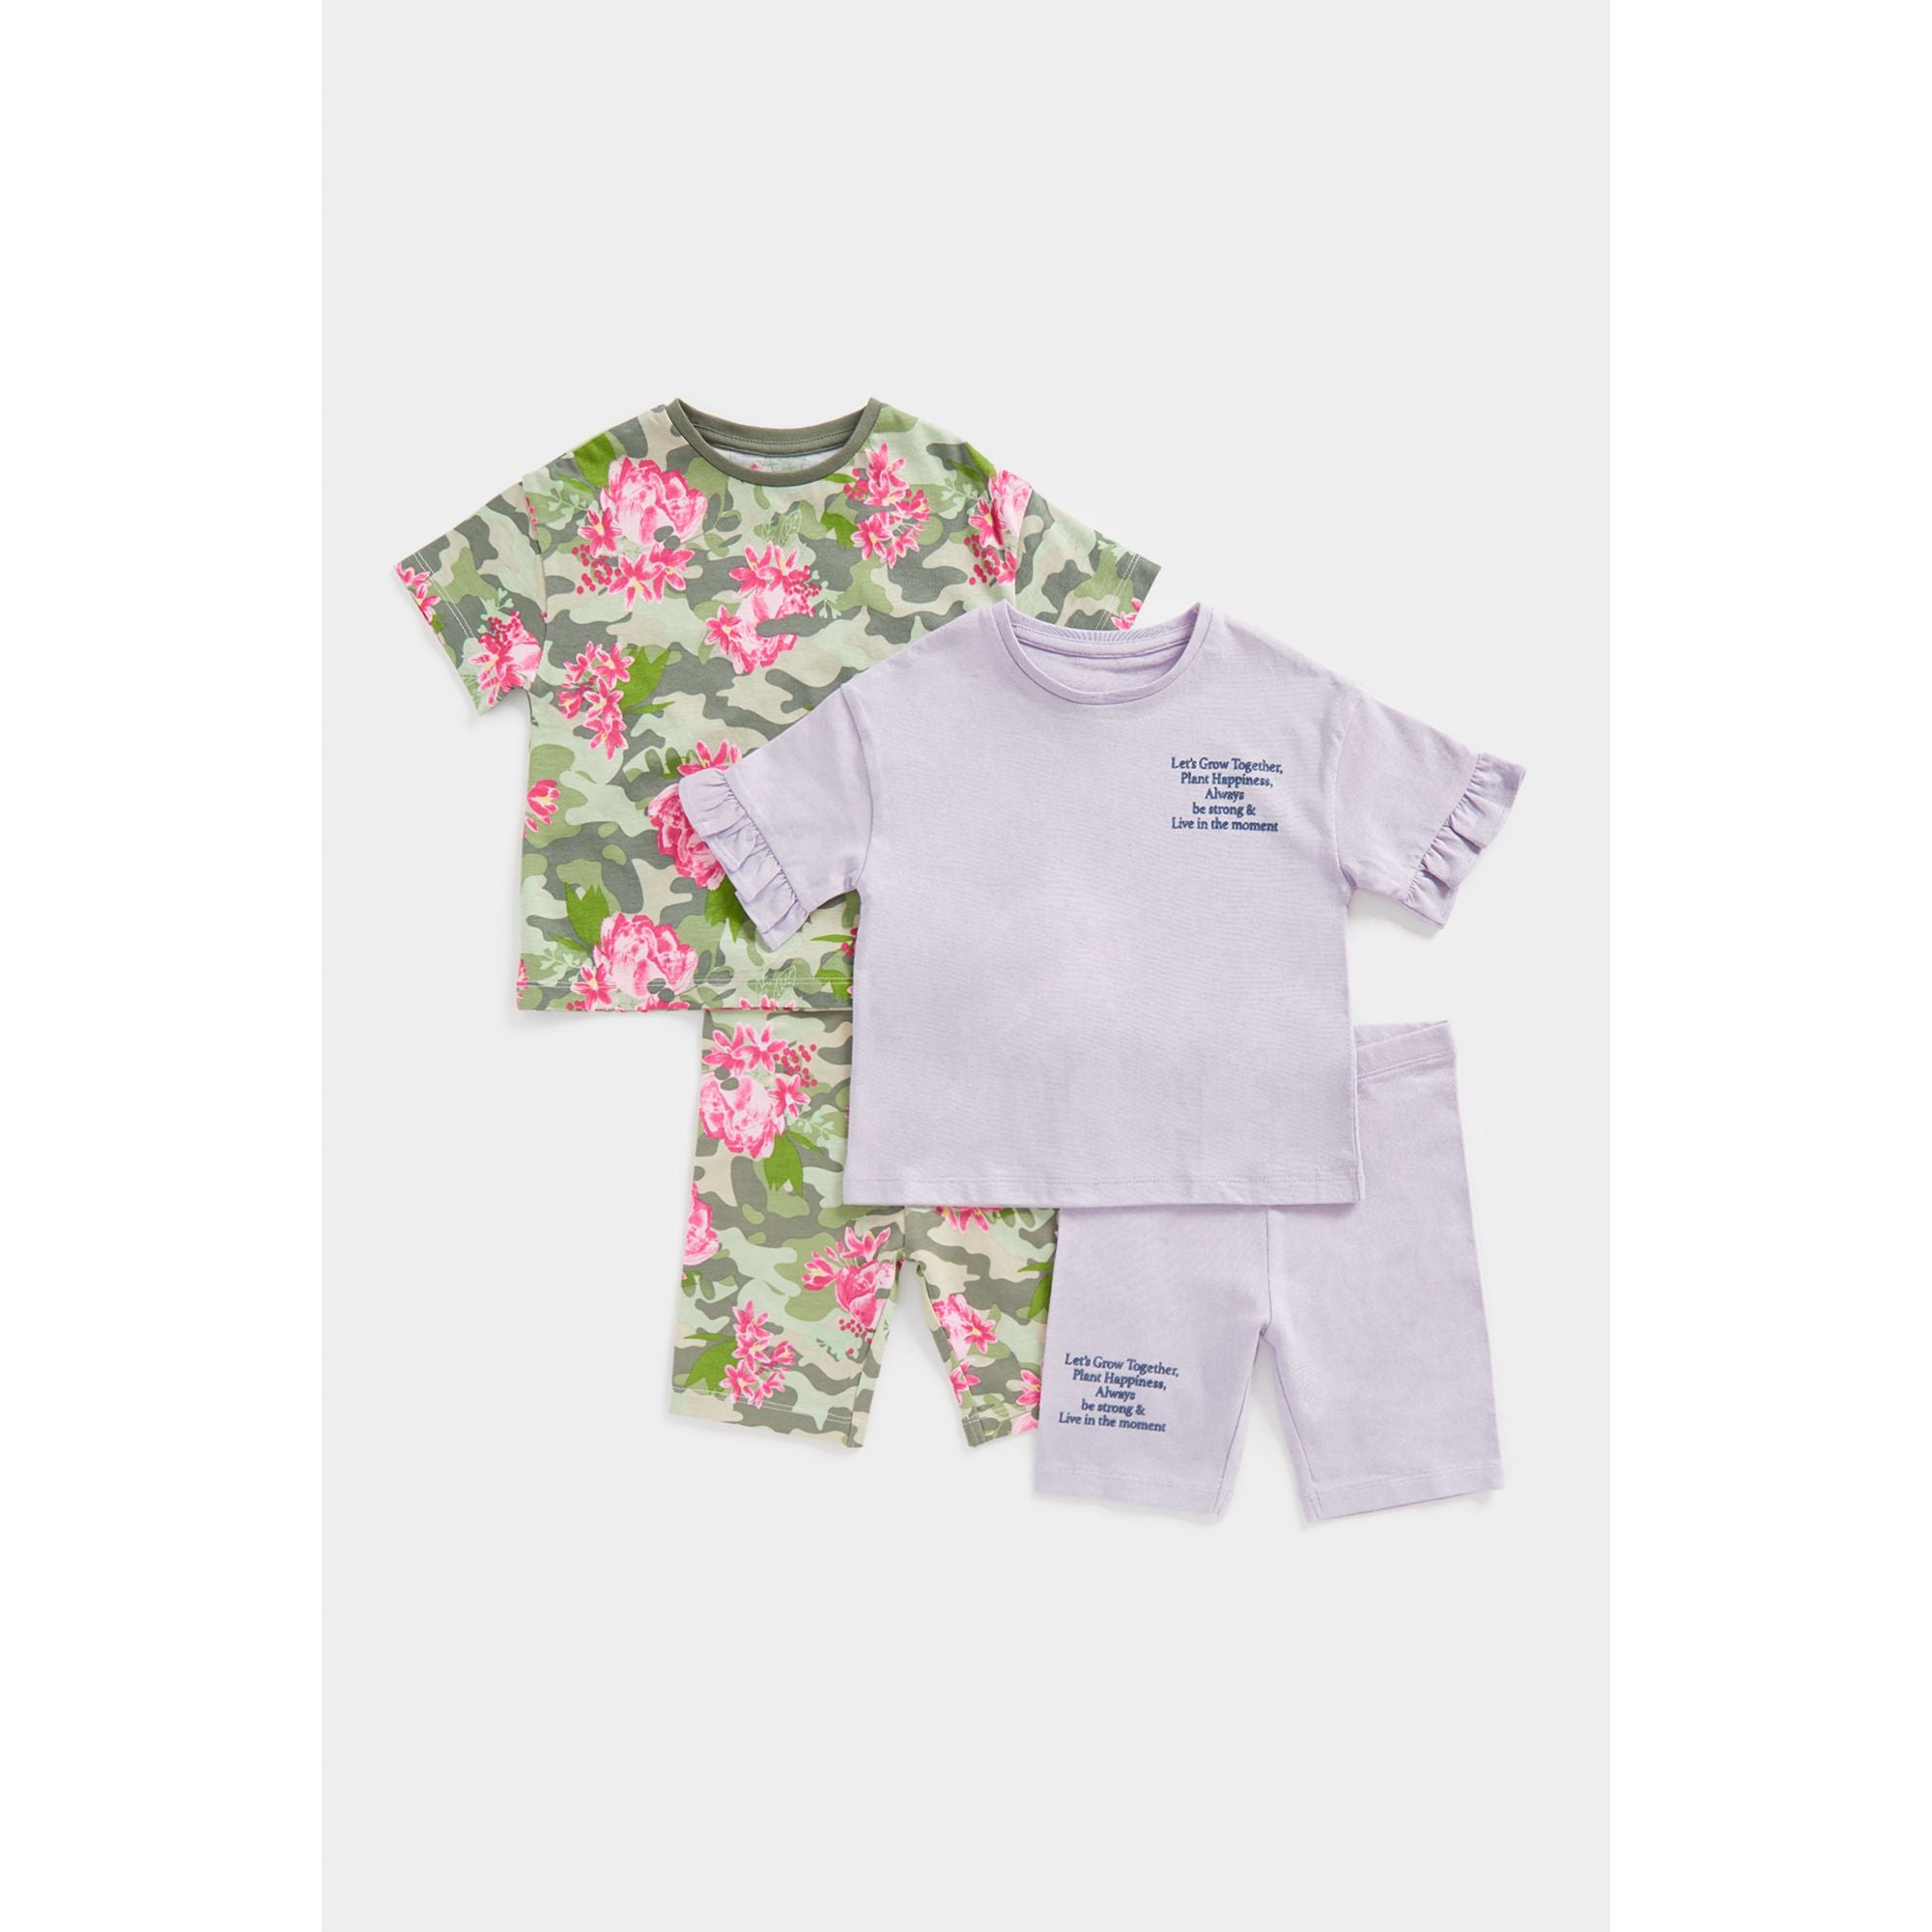 Mothercare Botanical T-Shirt and Short Sets